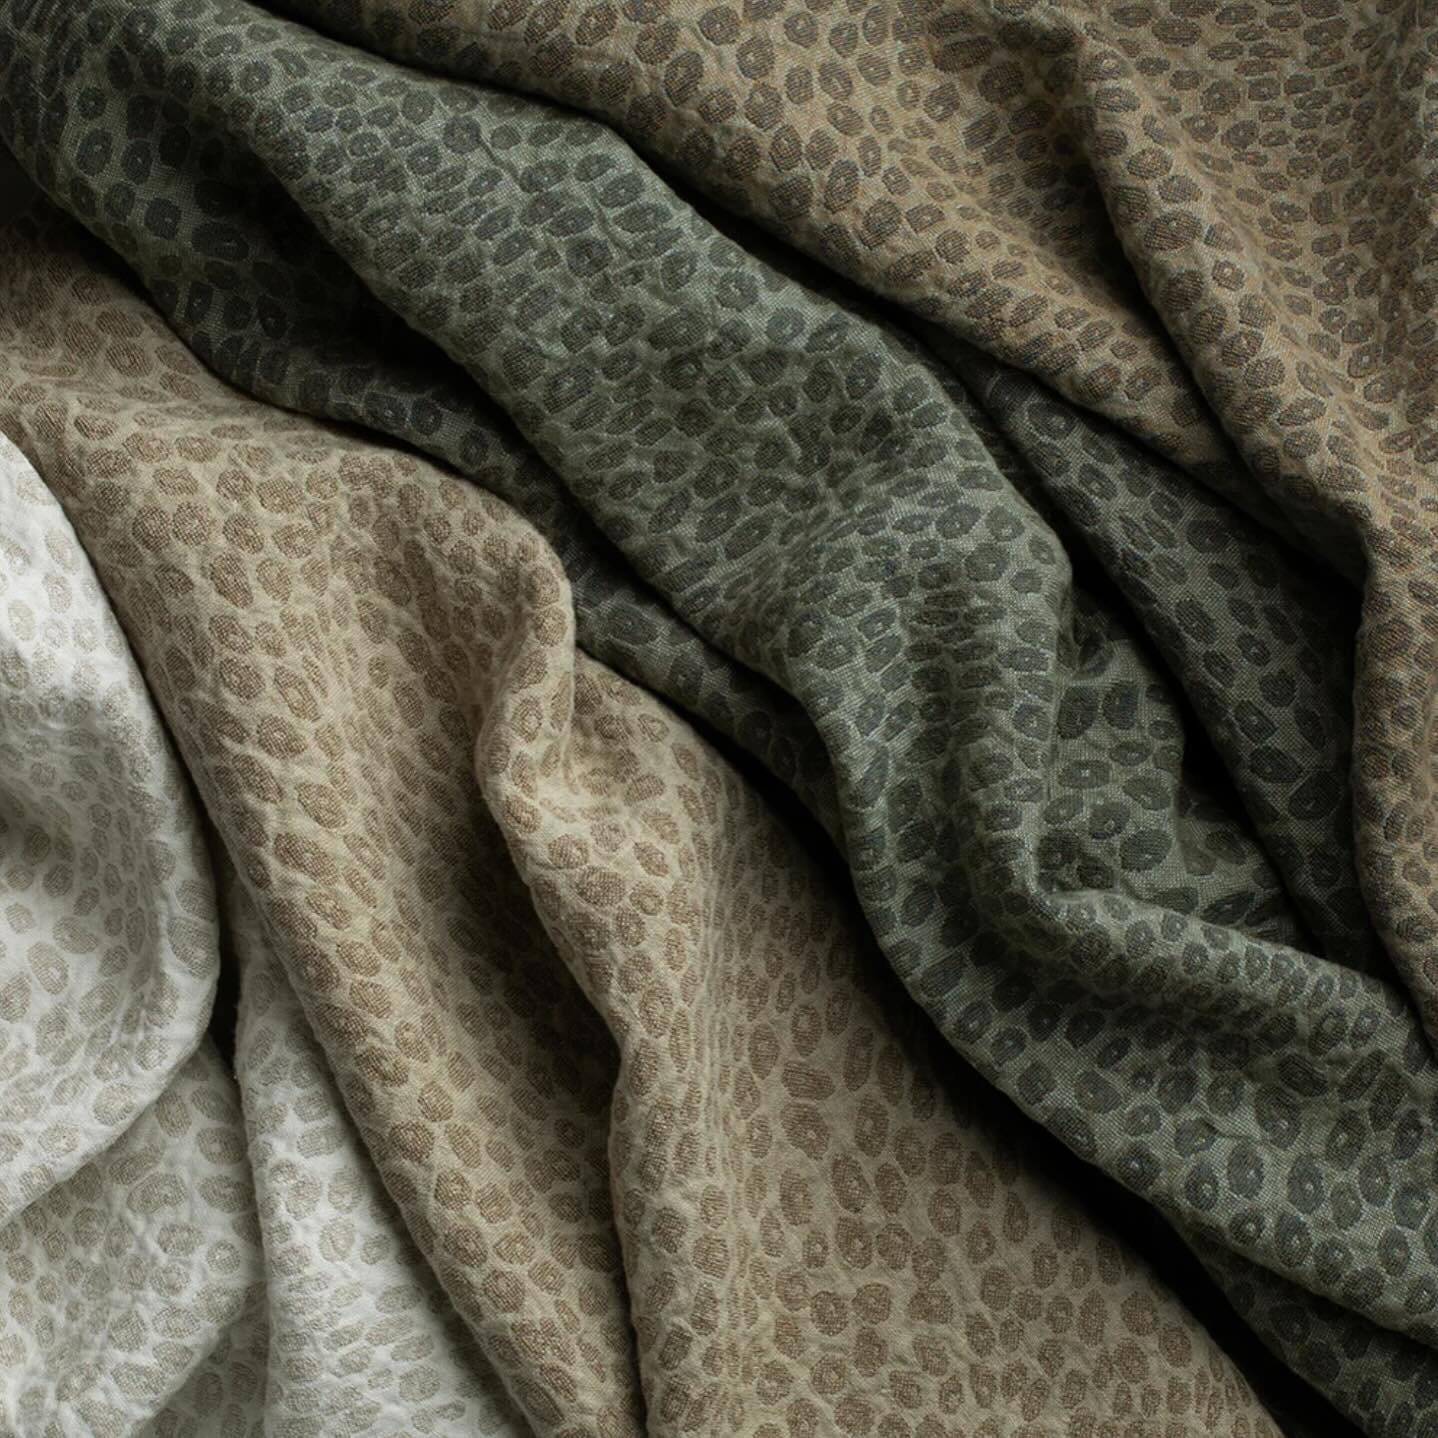 De Le Cuona

Vi f&oslash;rer alle de vakre tekstilene fra de Le Cuona.
 
#delecuonafabric #interiorinspiration #interi&oslash;rinspo